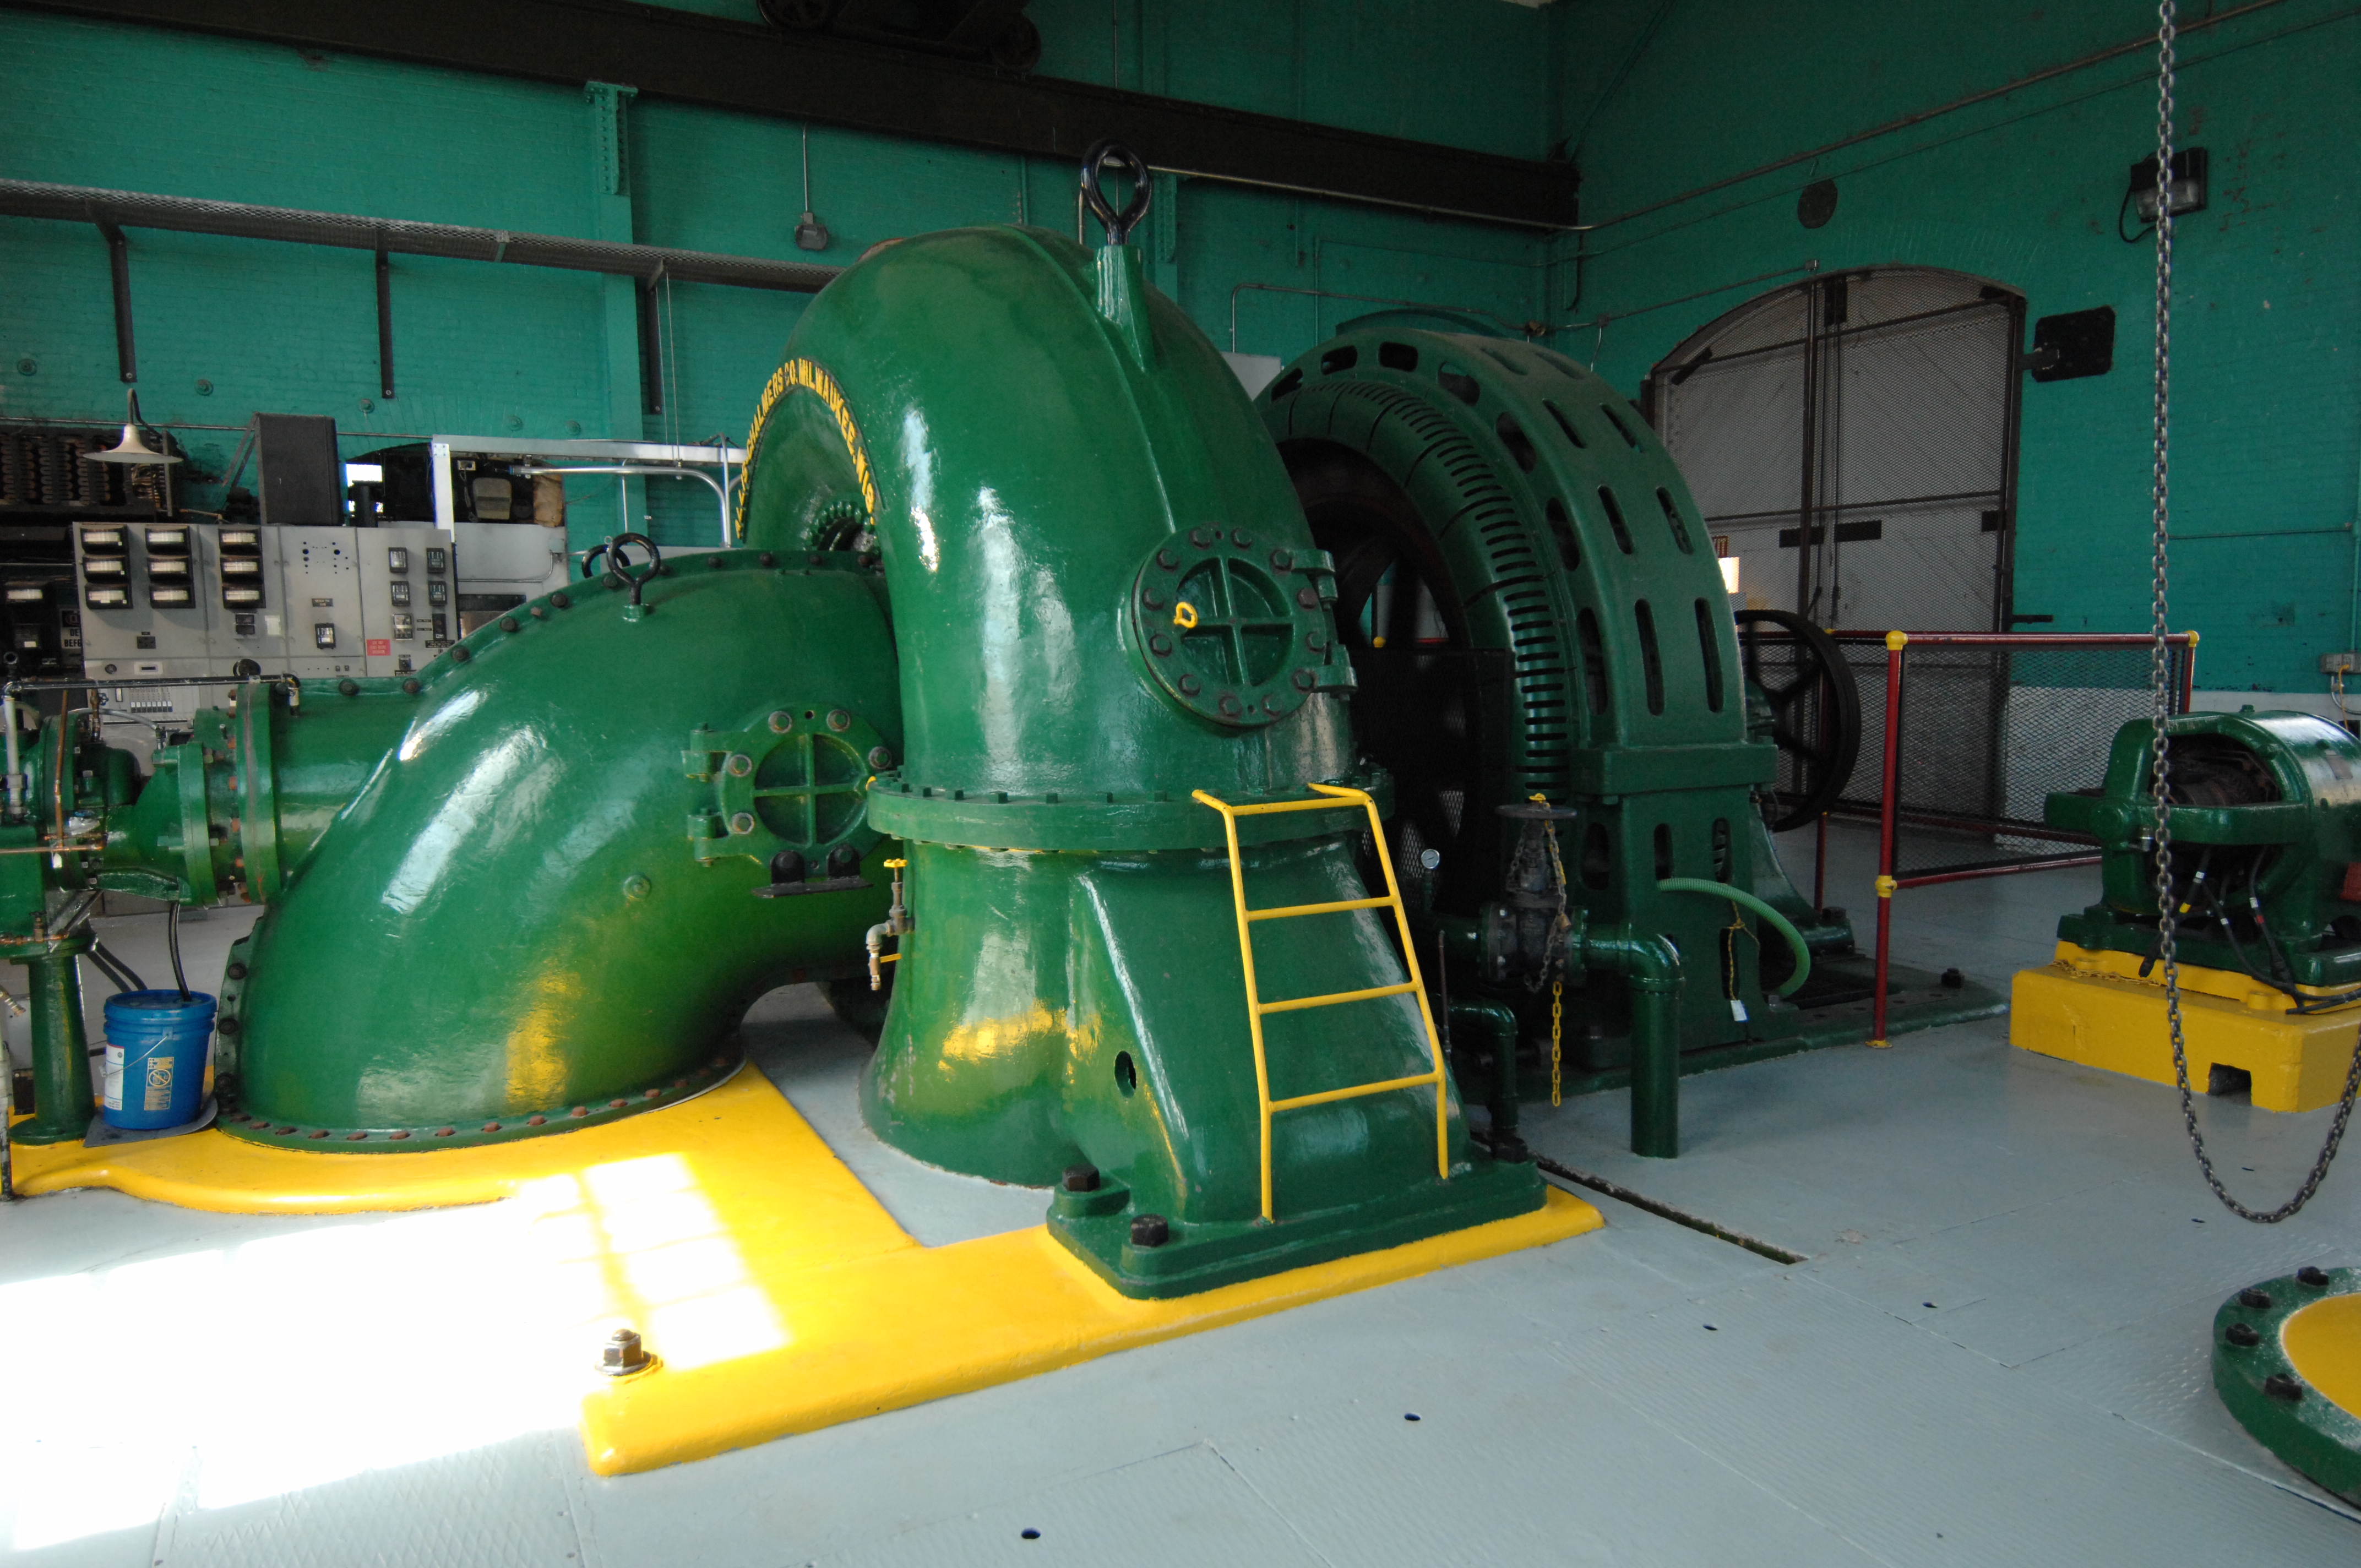 hydroelectric power turbine